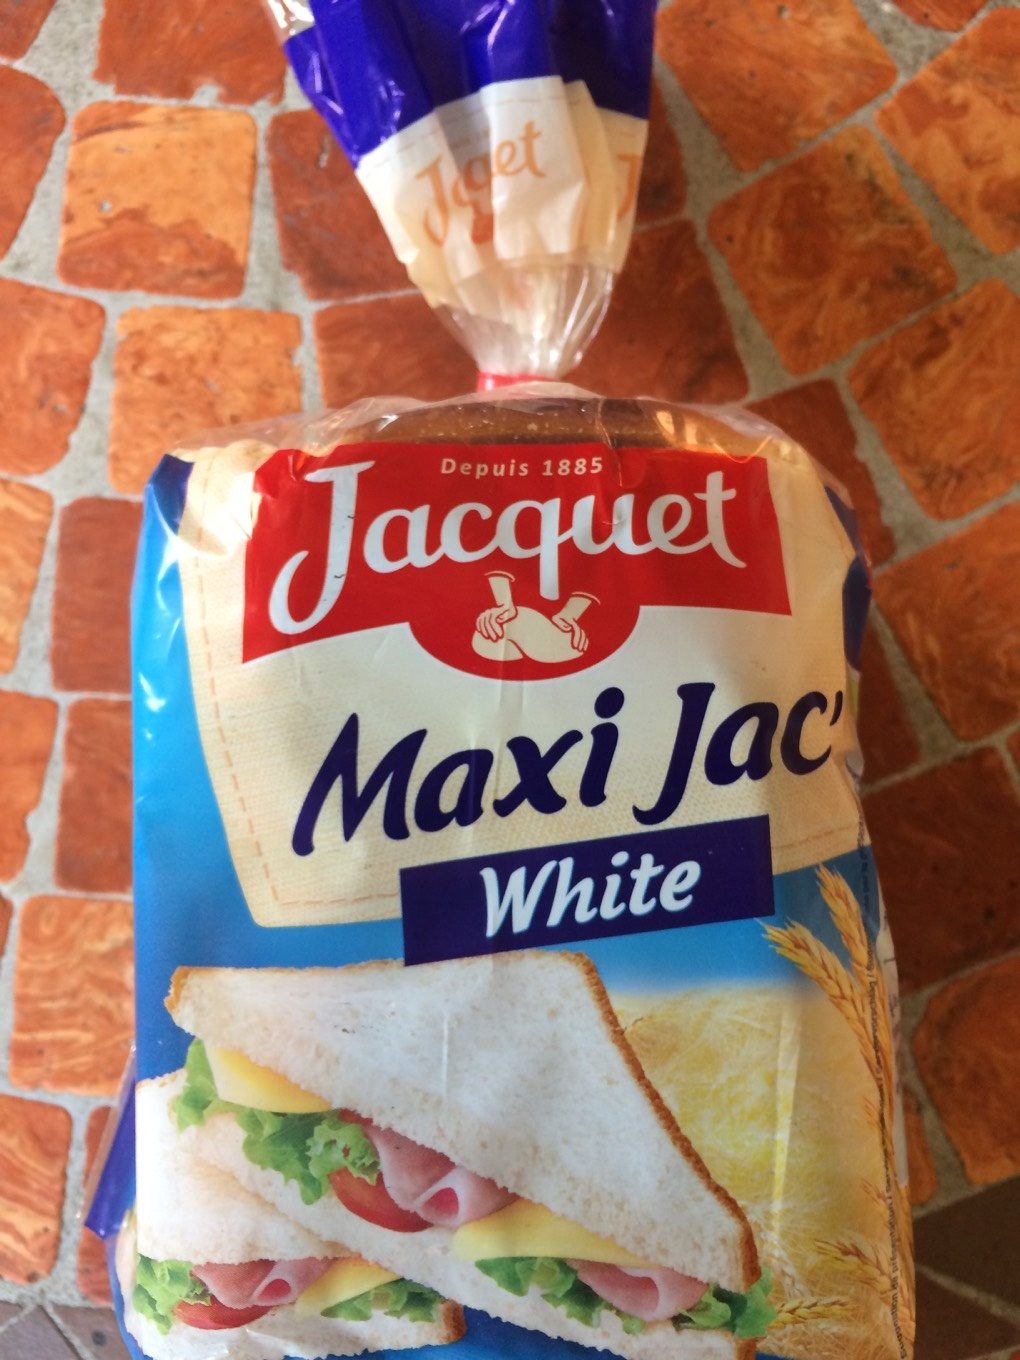 maxi jac whithe - Product - fr